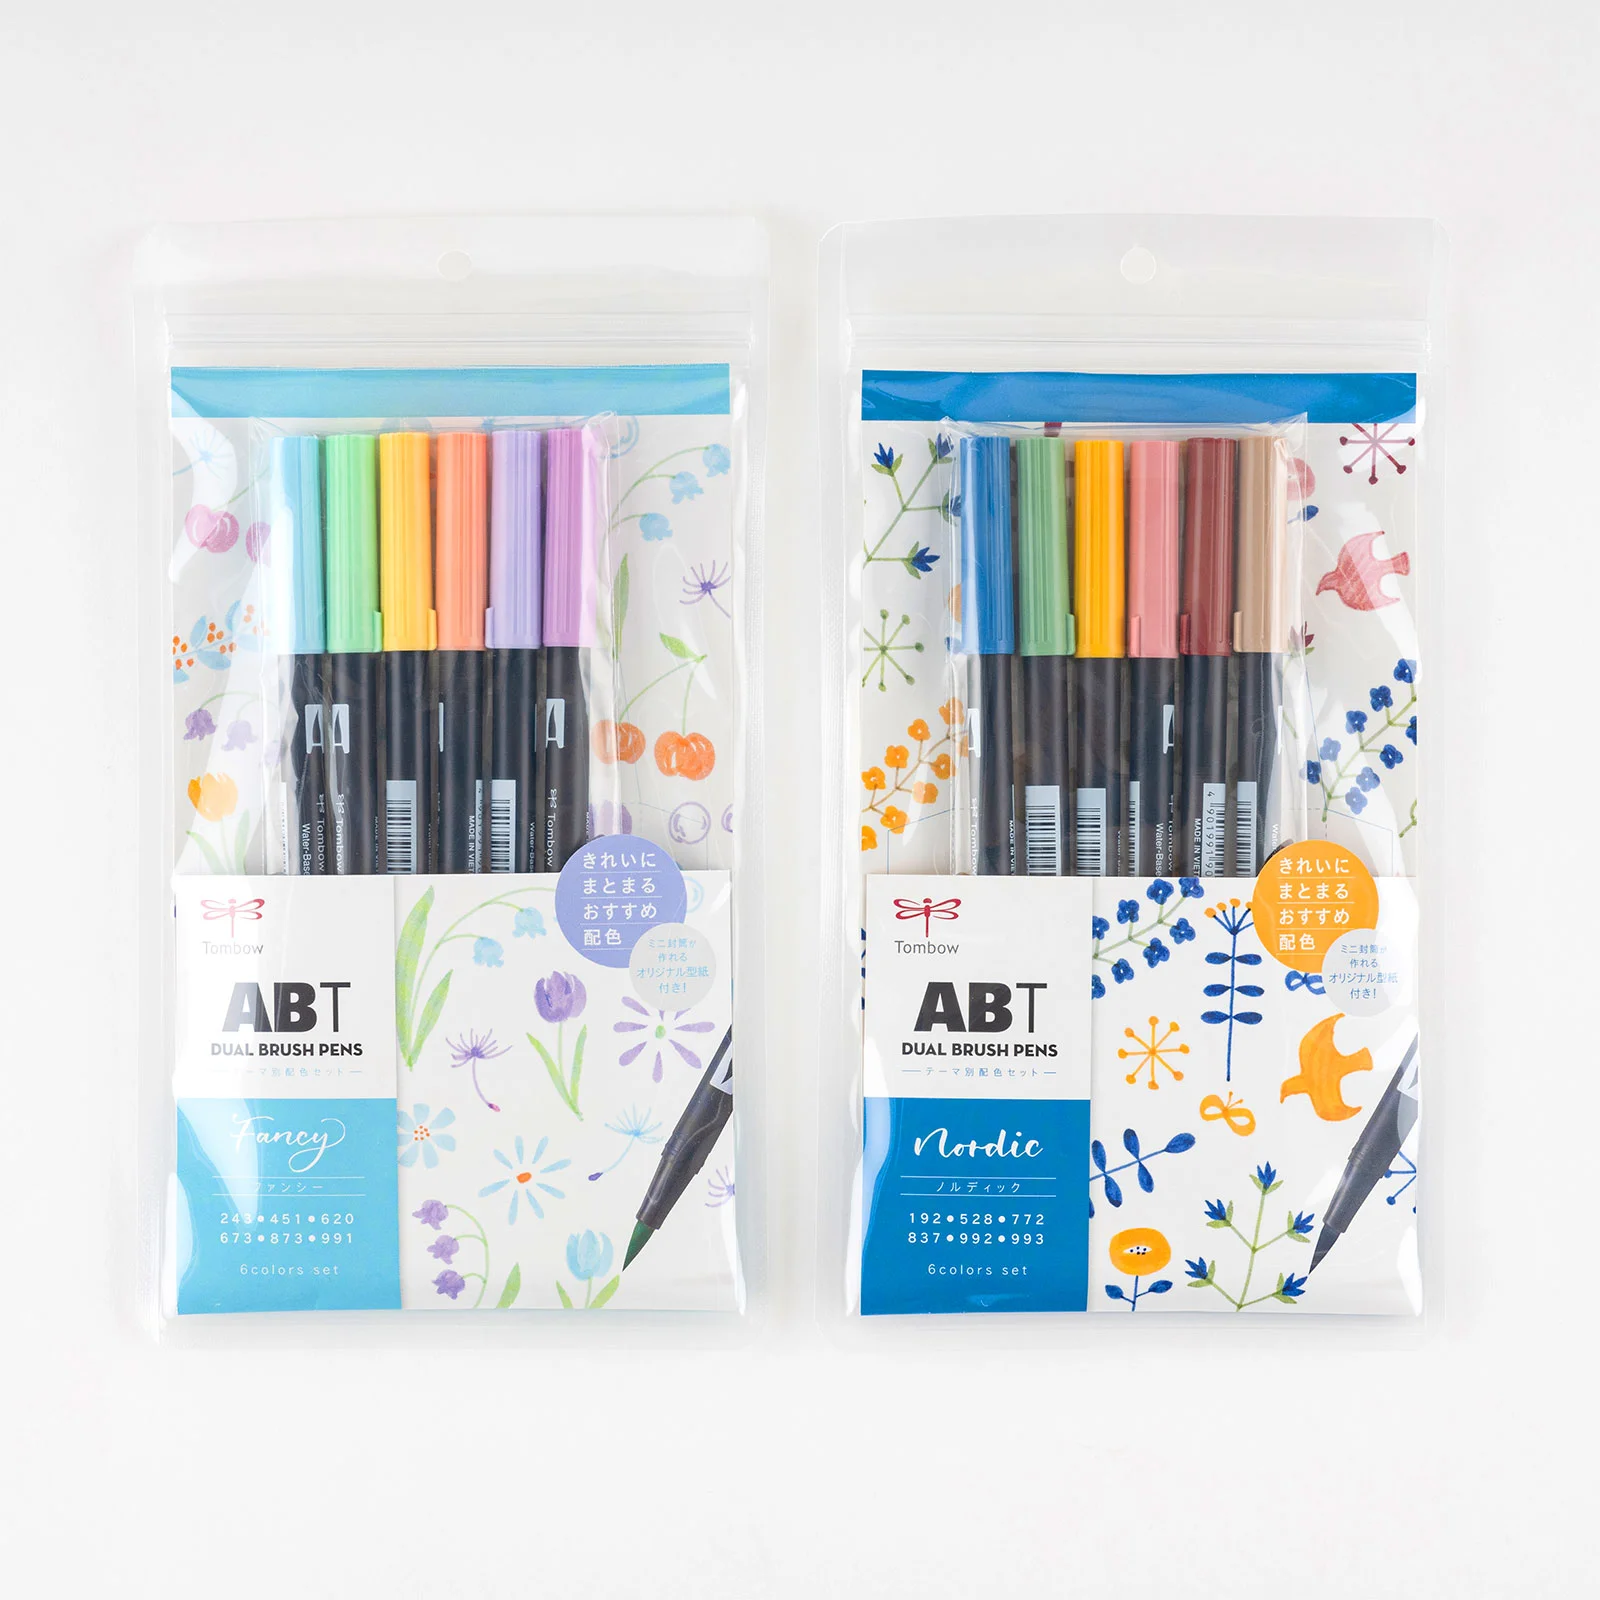 Tombow Dual Brush Pen 6pc Secondary Set - Meininger Art Supply